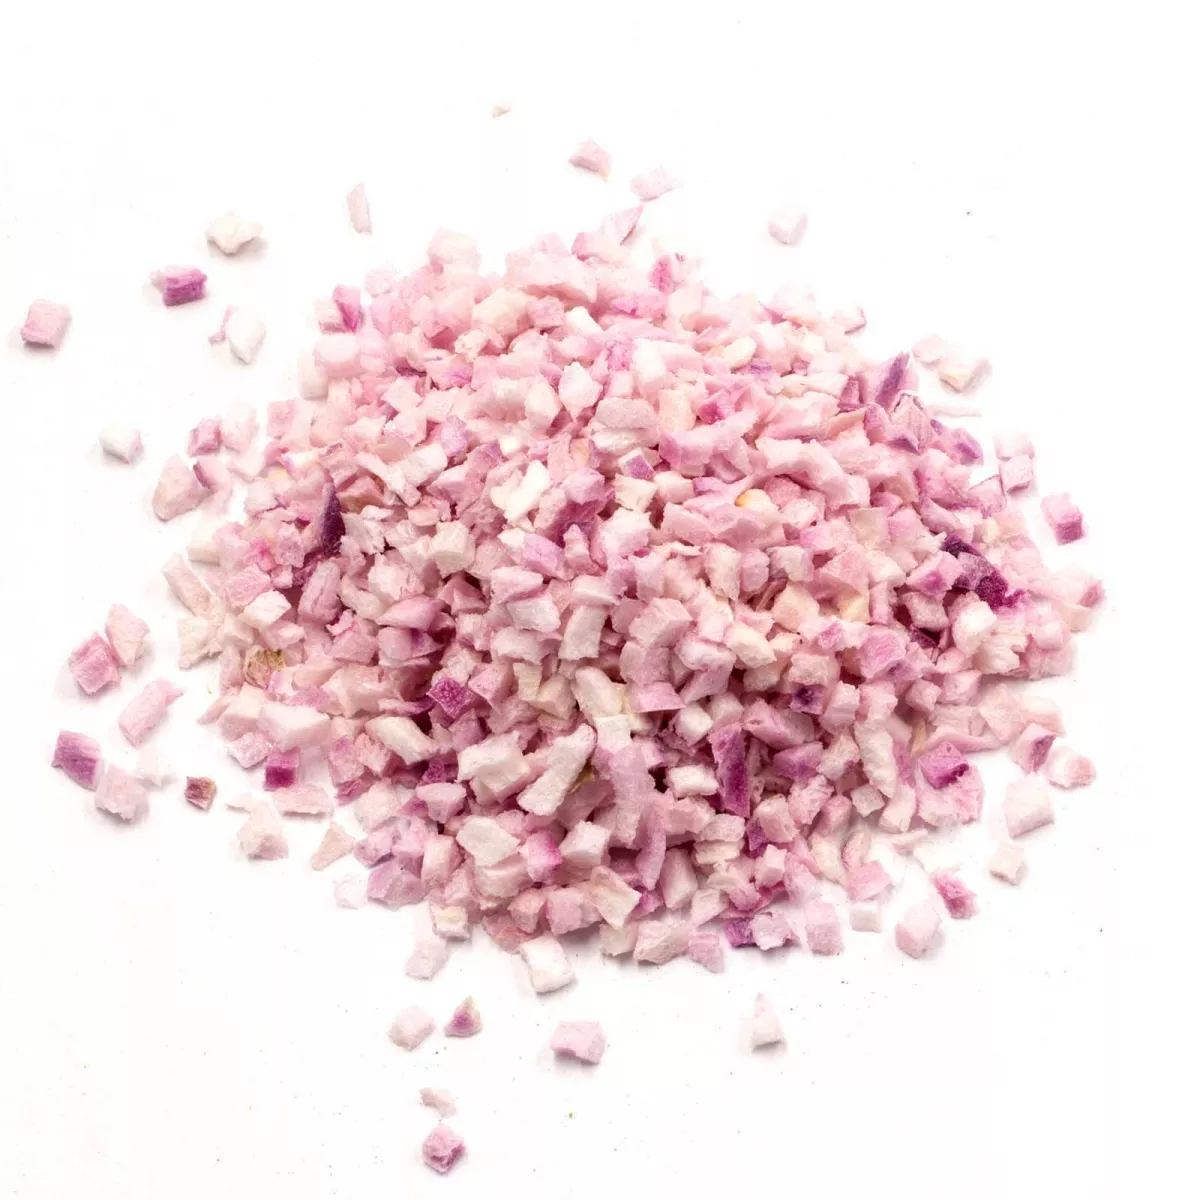 Ceapa rosie granule liofilizata, sac 1 kg